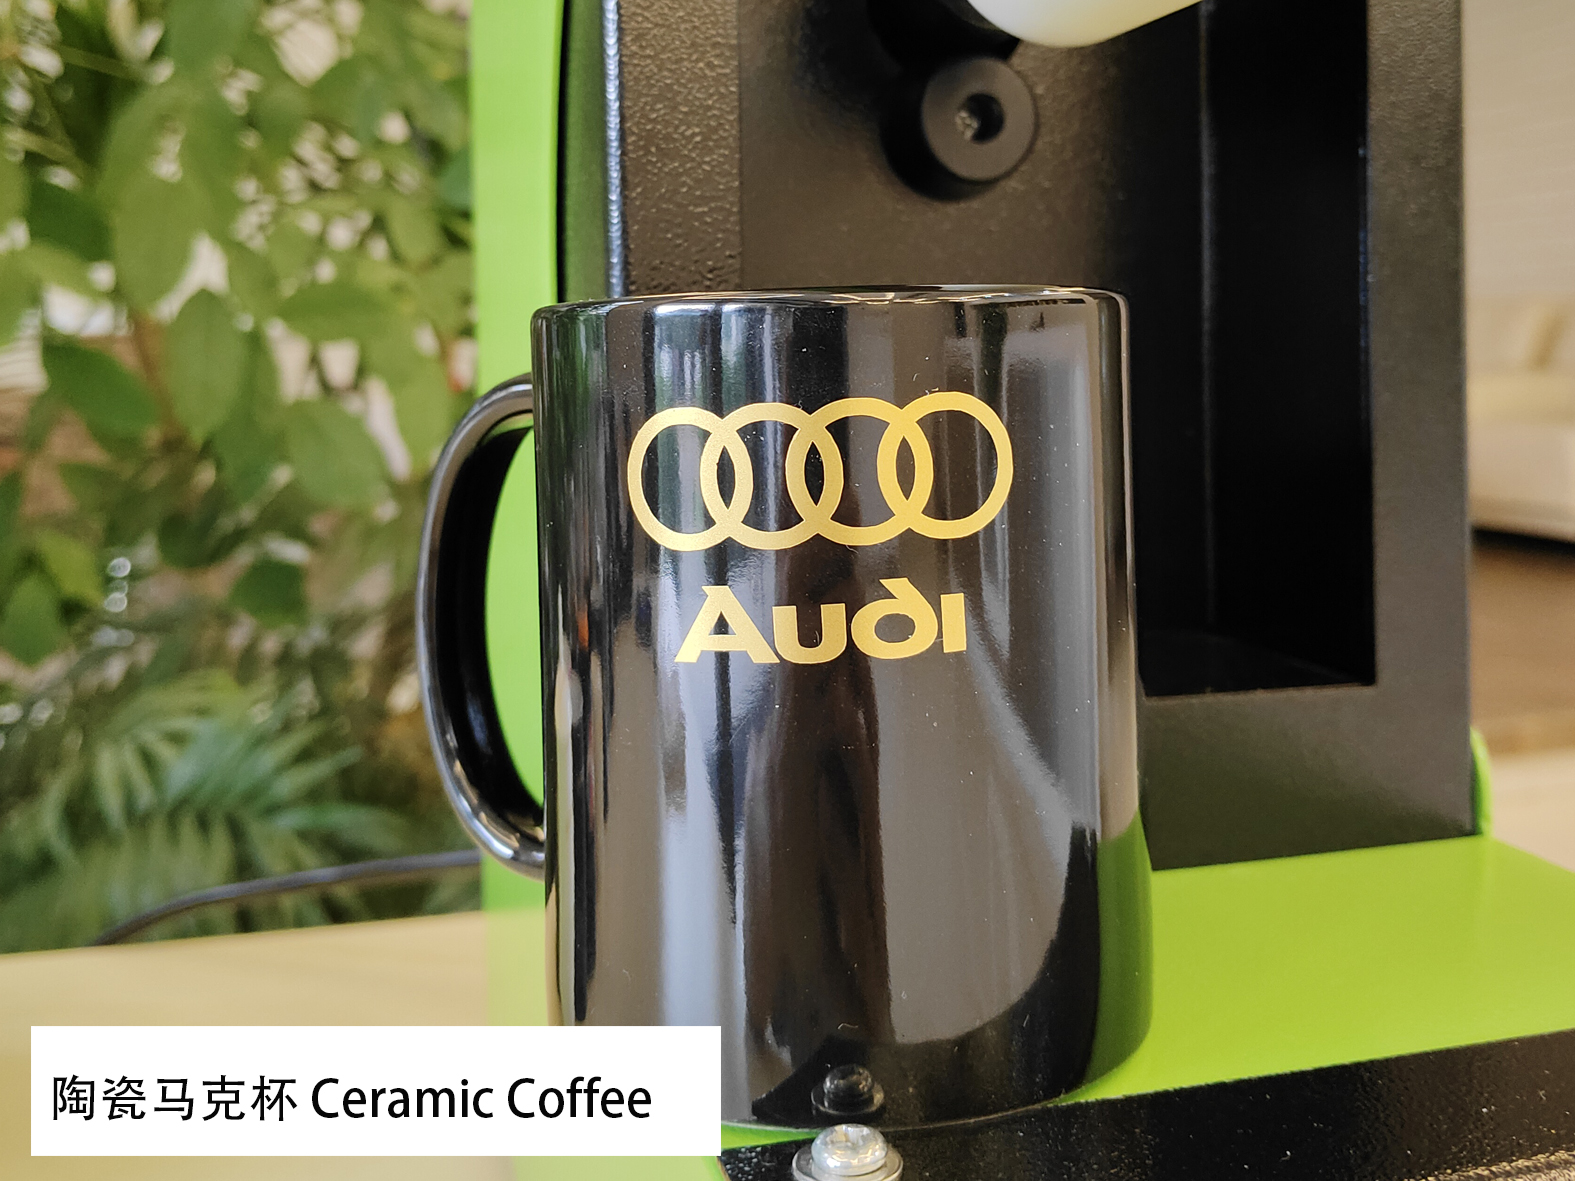 Brilliant Golden Heat Transfer Decals Foil (HSF-GD811) Airson Ceramic Coffee Of Audi Suaicheantas